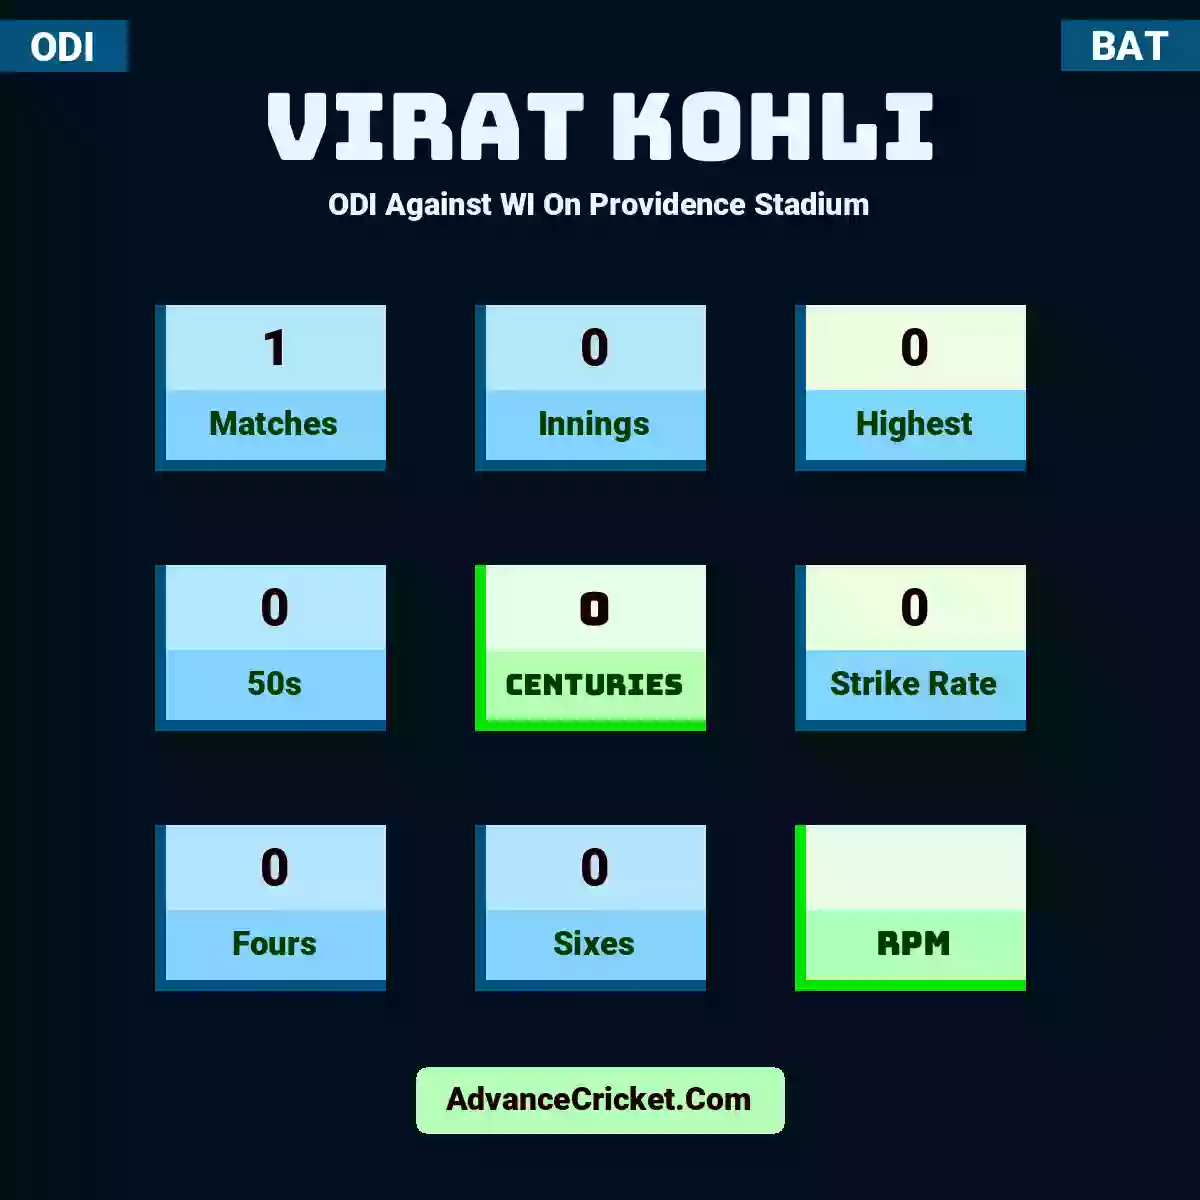 Virat Kohli ODI  Against WI On Providence Stadium, Virat Kohli played 1 matches, scored 0 runs as highest, 0 half-centuries, and 0 centuries, with a strike rate of 0. V.Kohli hit 0 fours and 0 sixes.